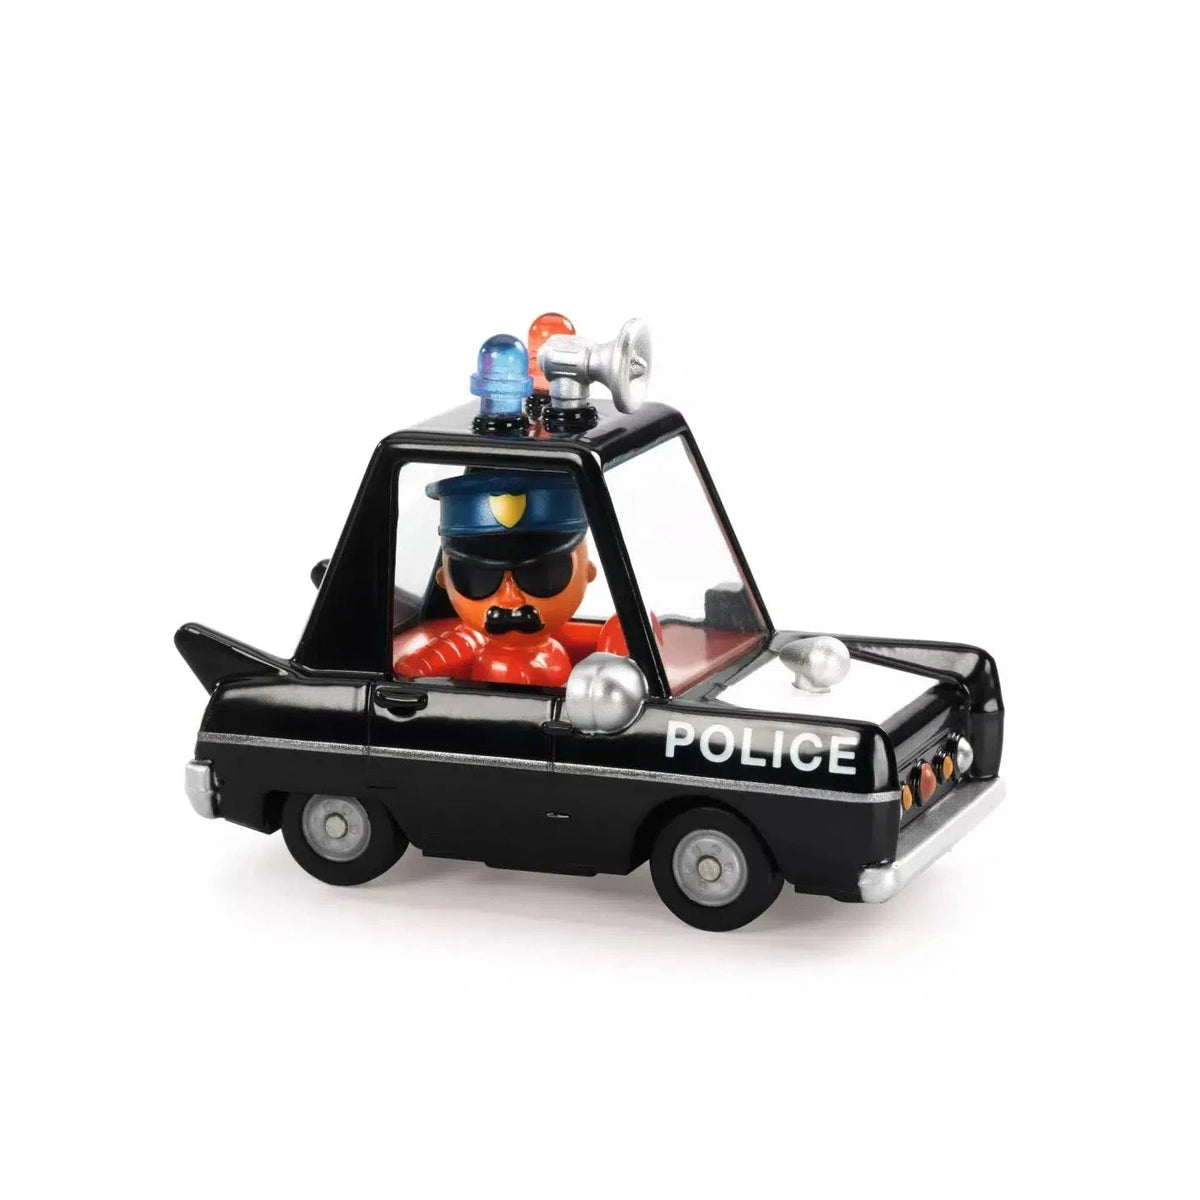 Crazy Motors - Hurry Police-Vehicles &amp; Transportation-Djeco-Yellow Springs Toy Company